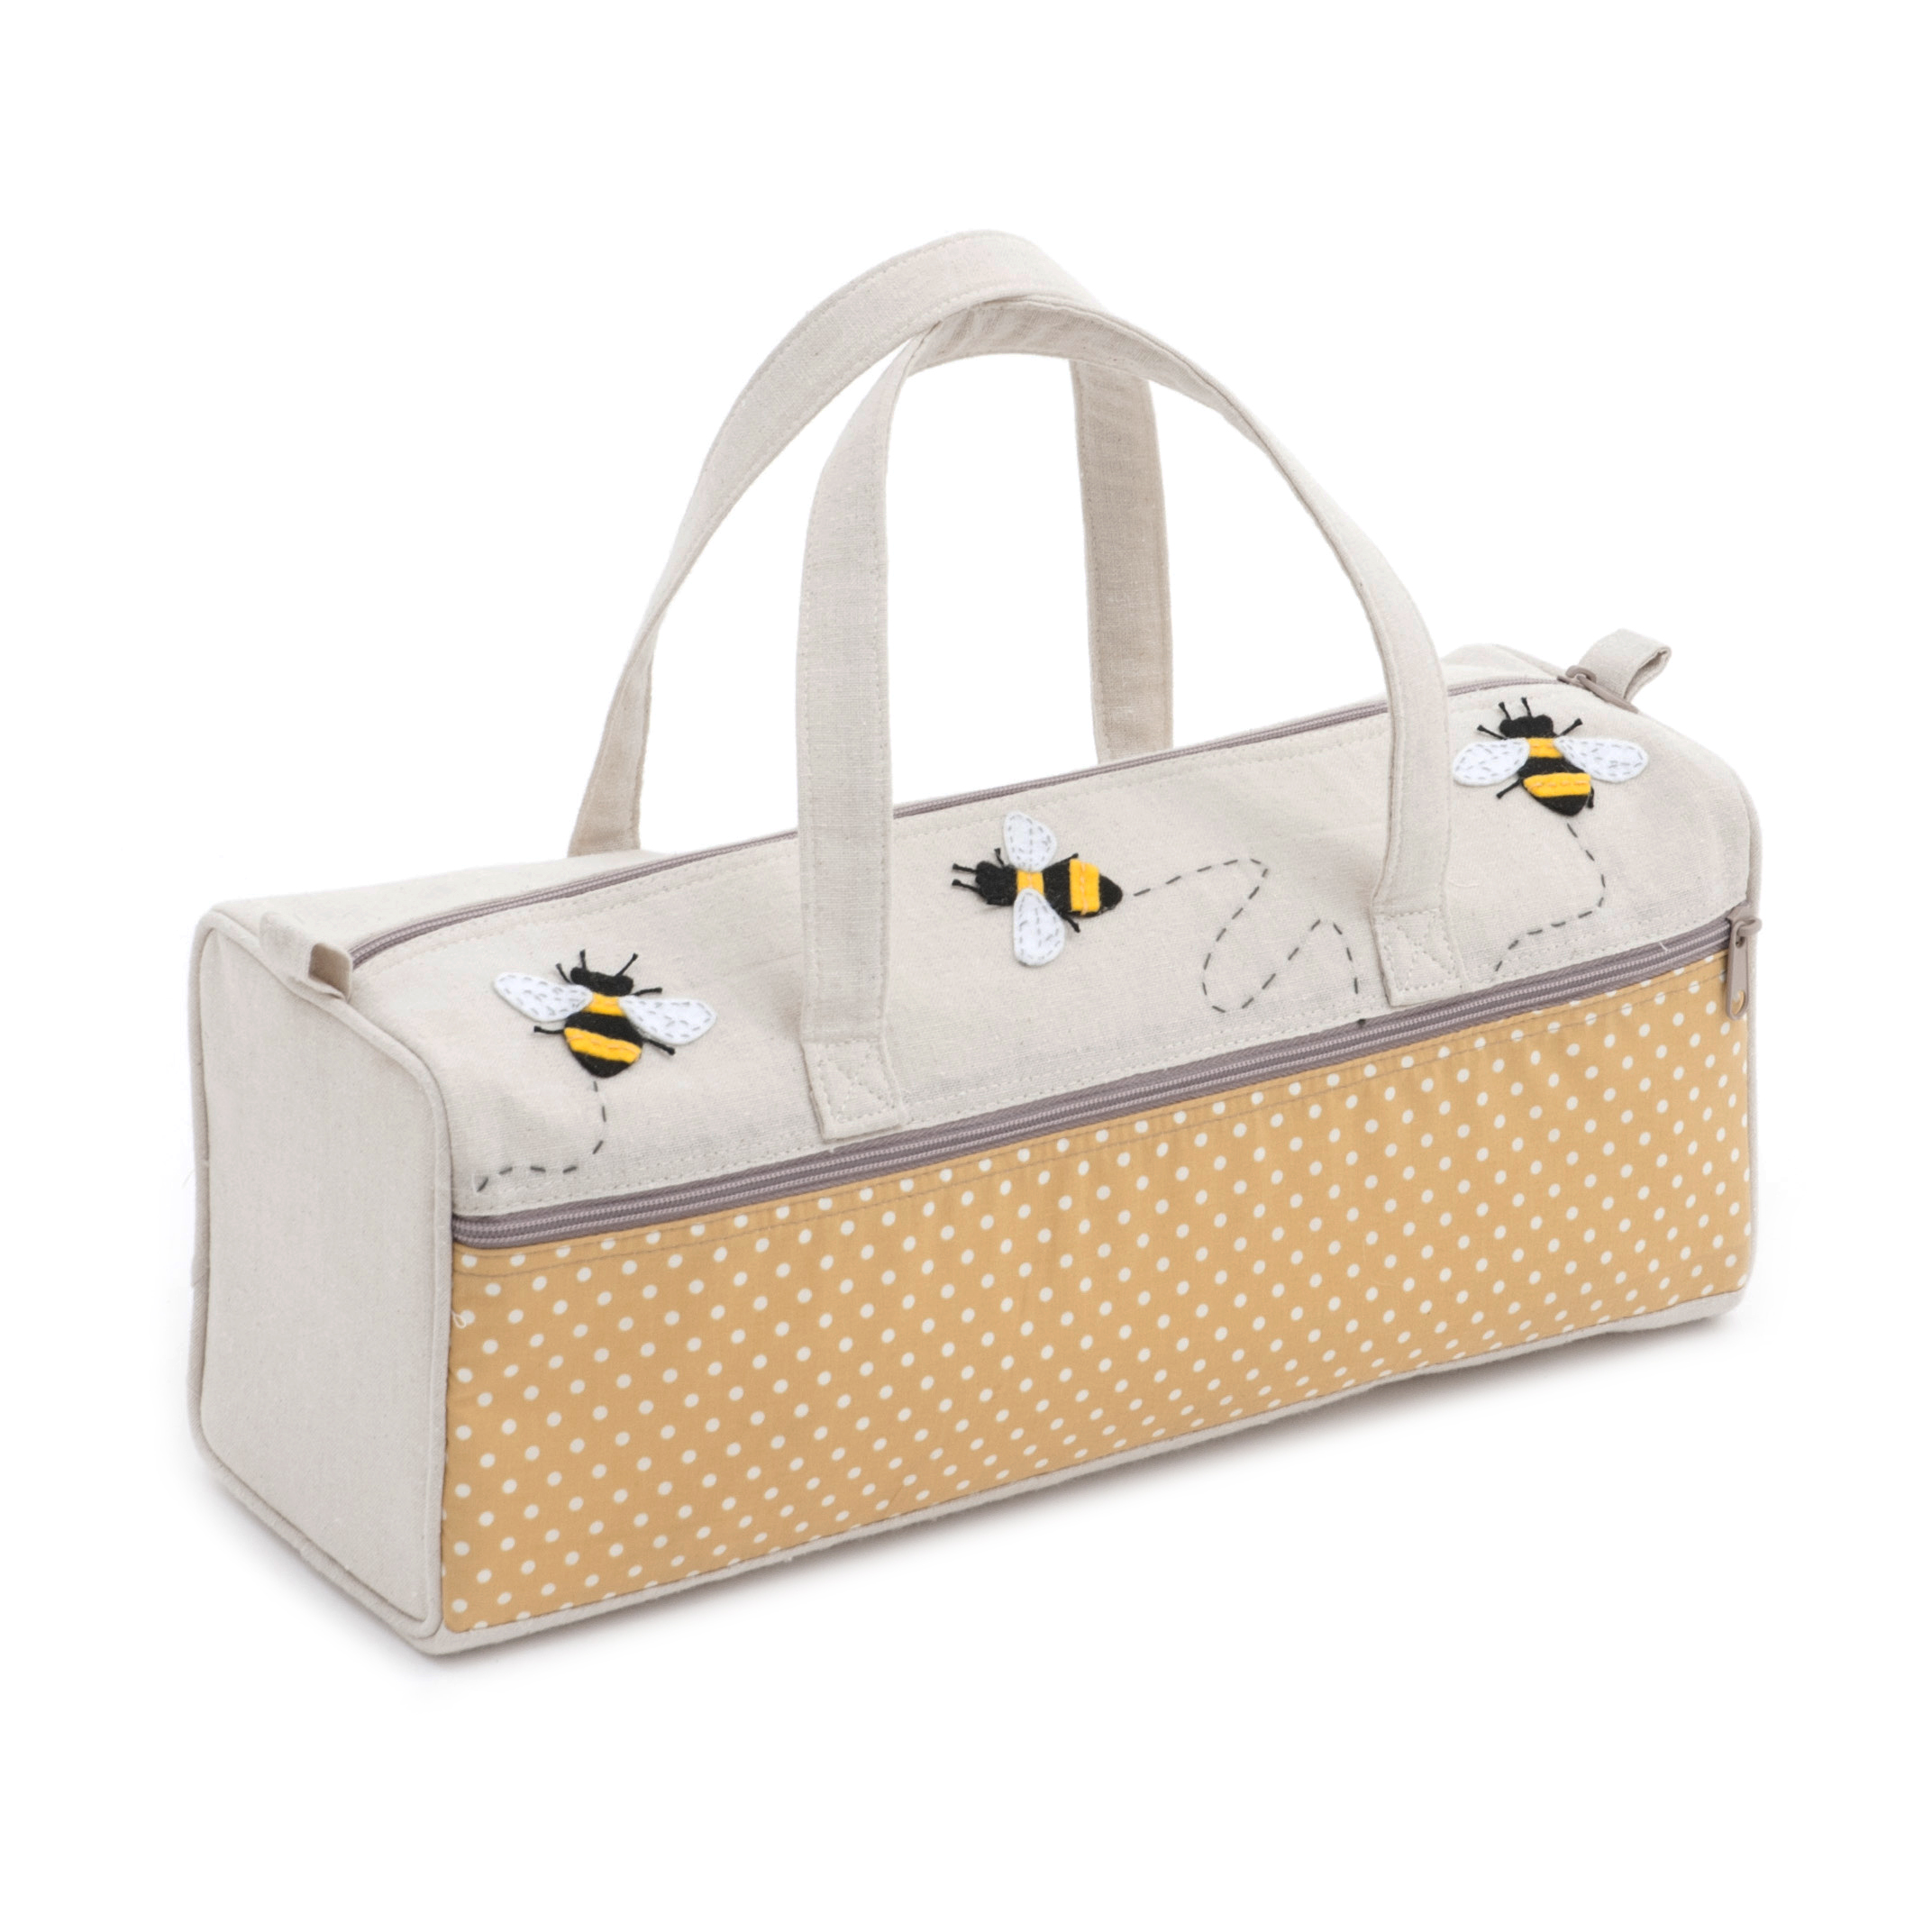 Applique Knitting Bag: Bee